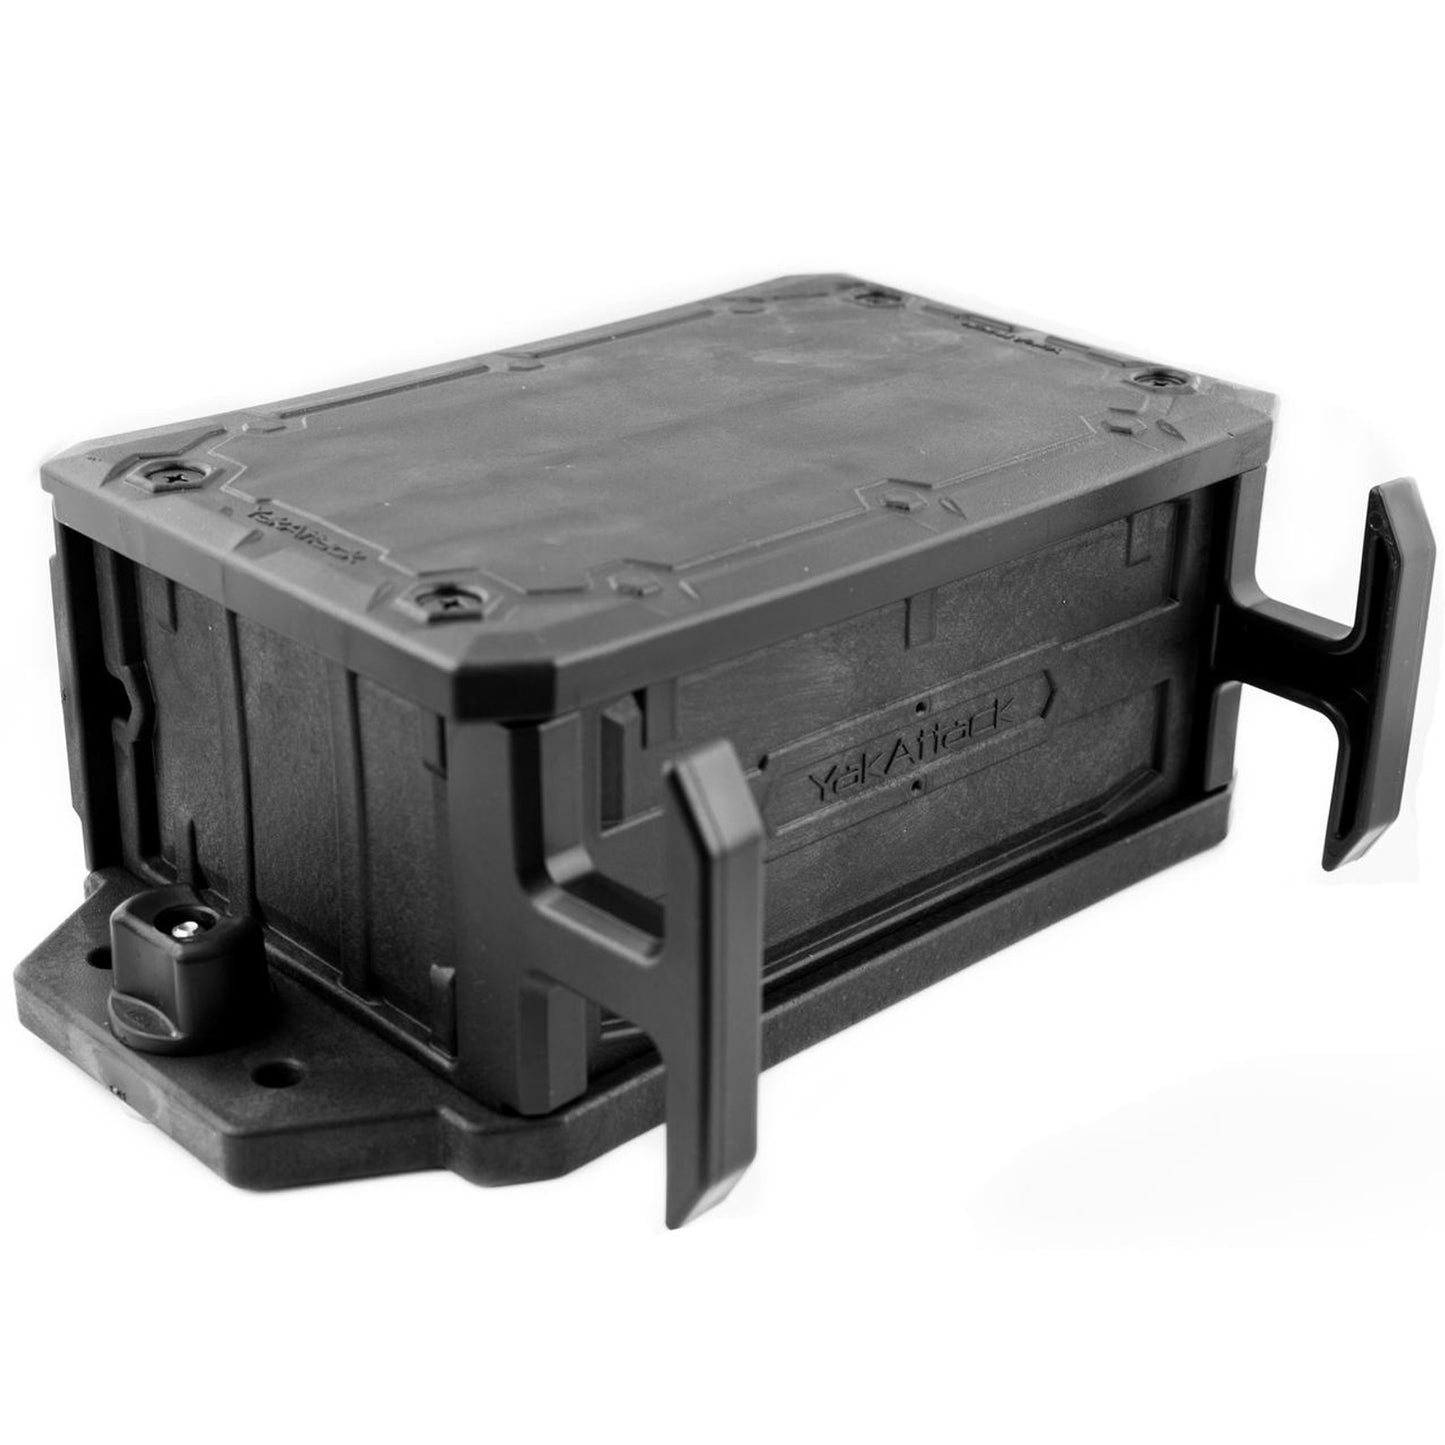 CellBlok Battery Box